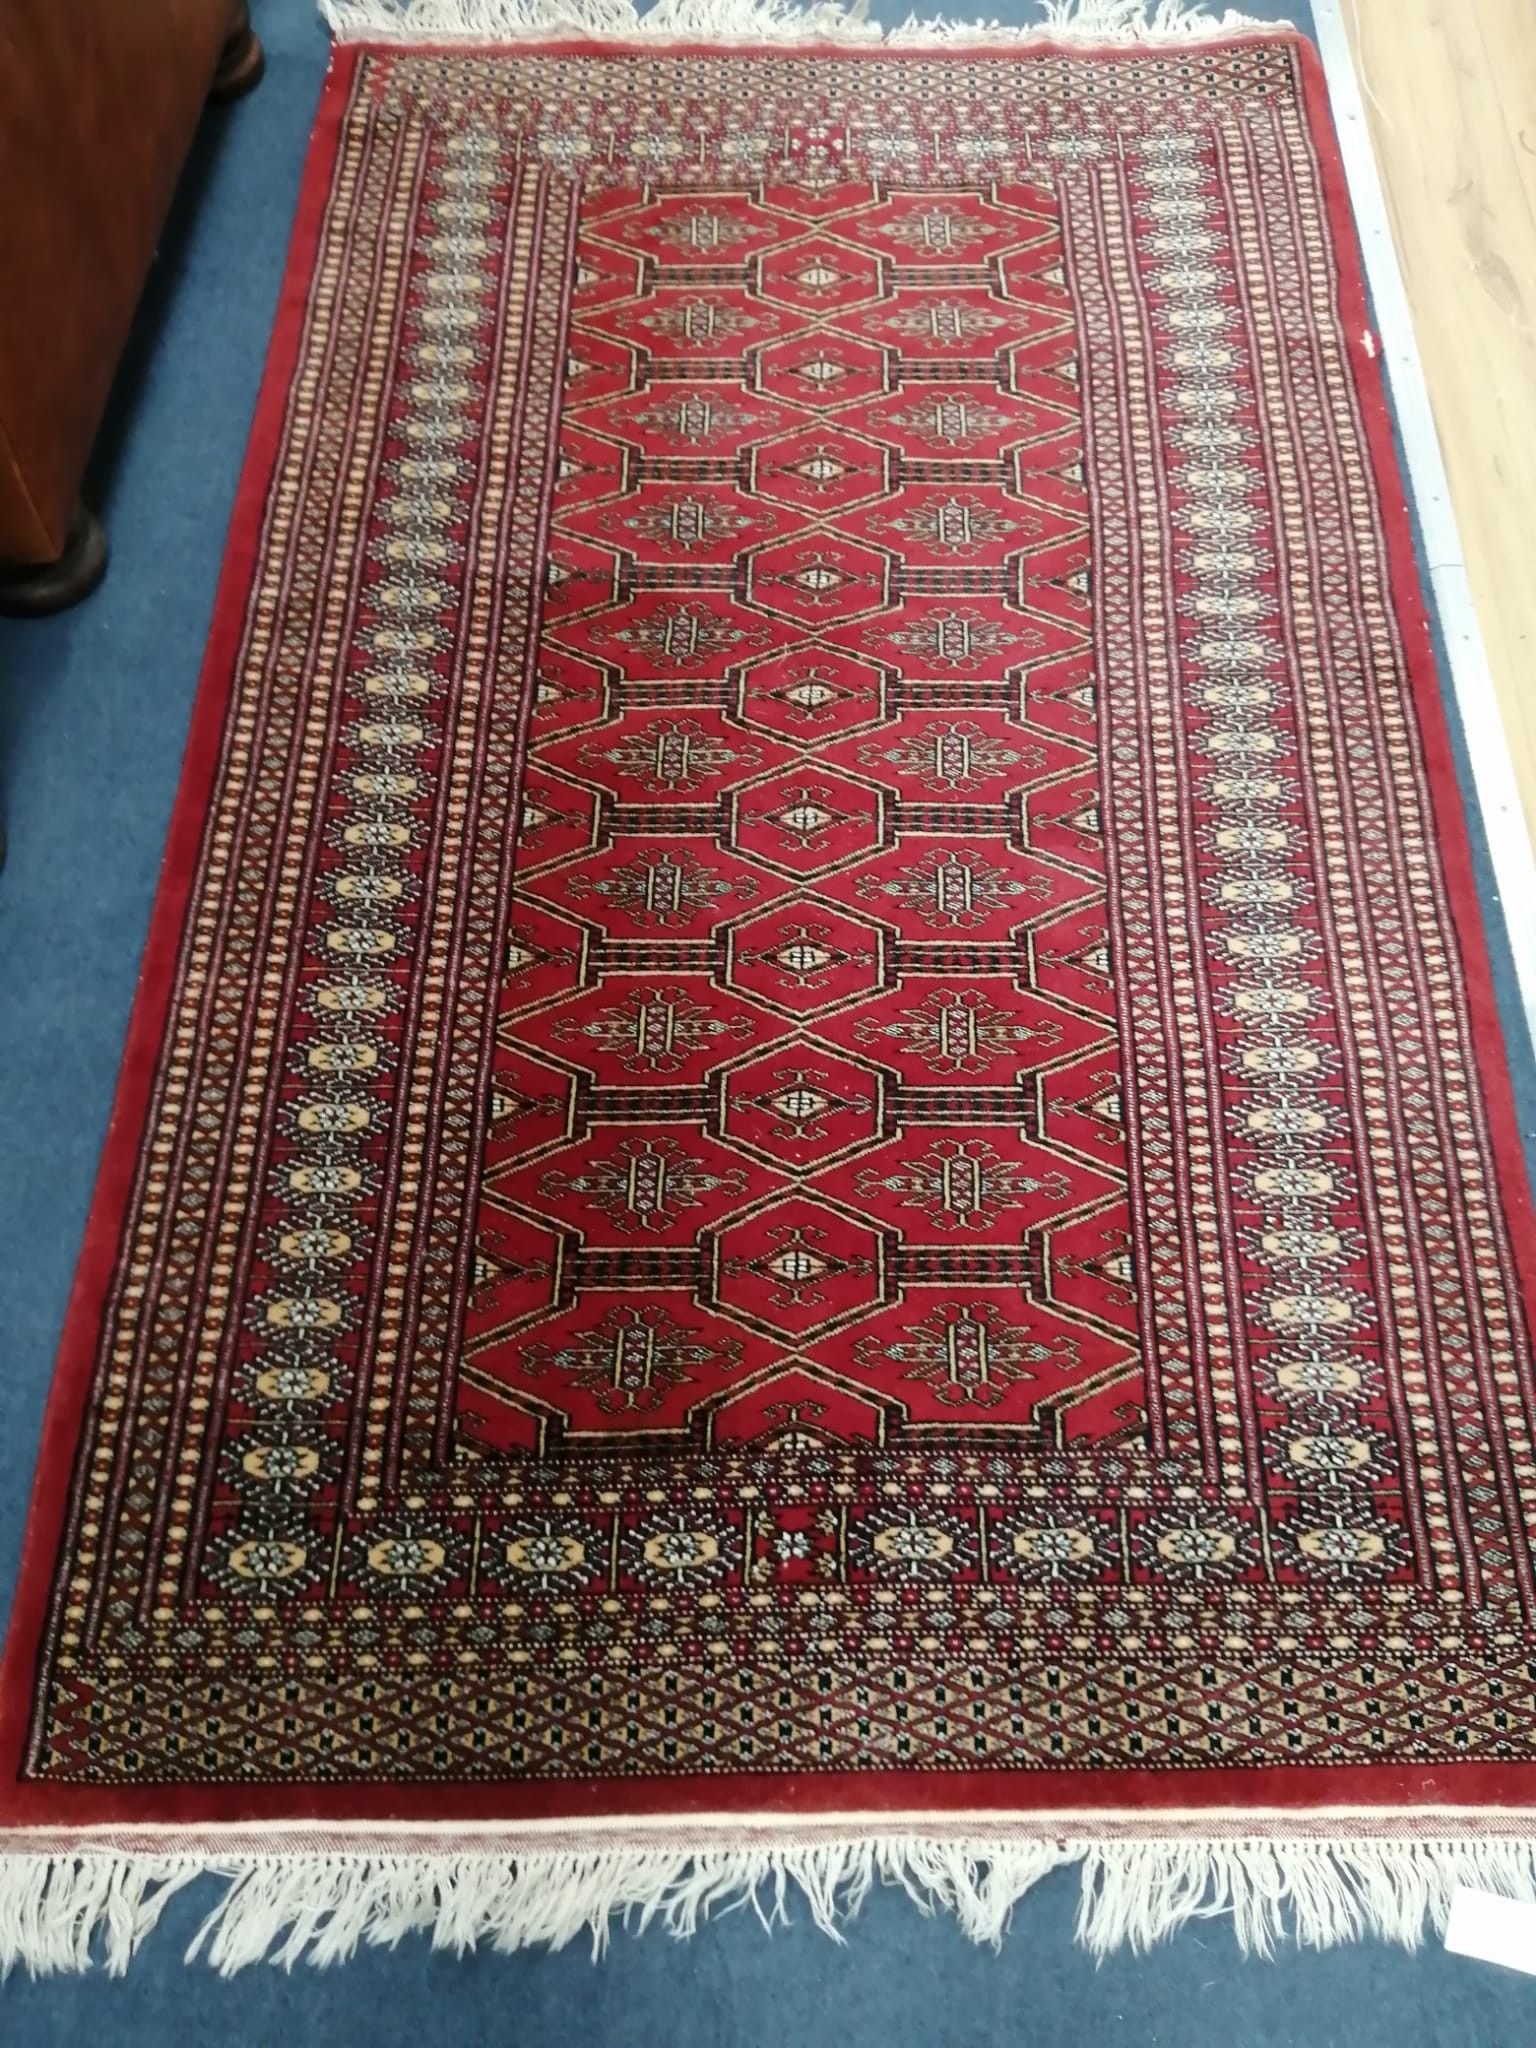 A Bokhara red ground rug, 164 x 100cm